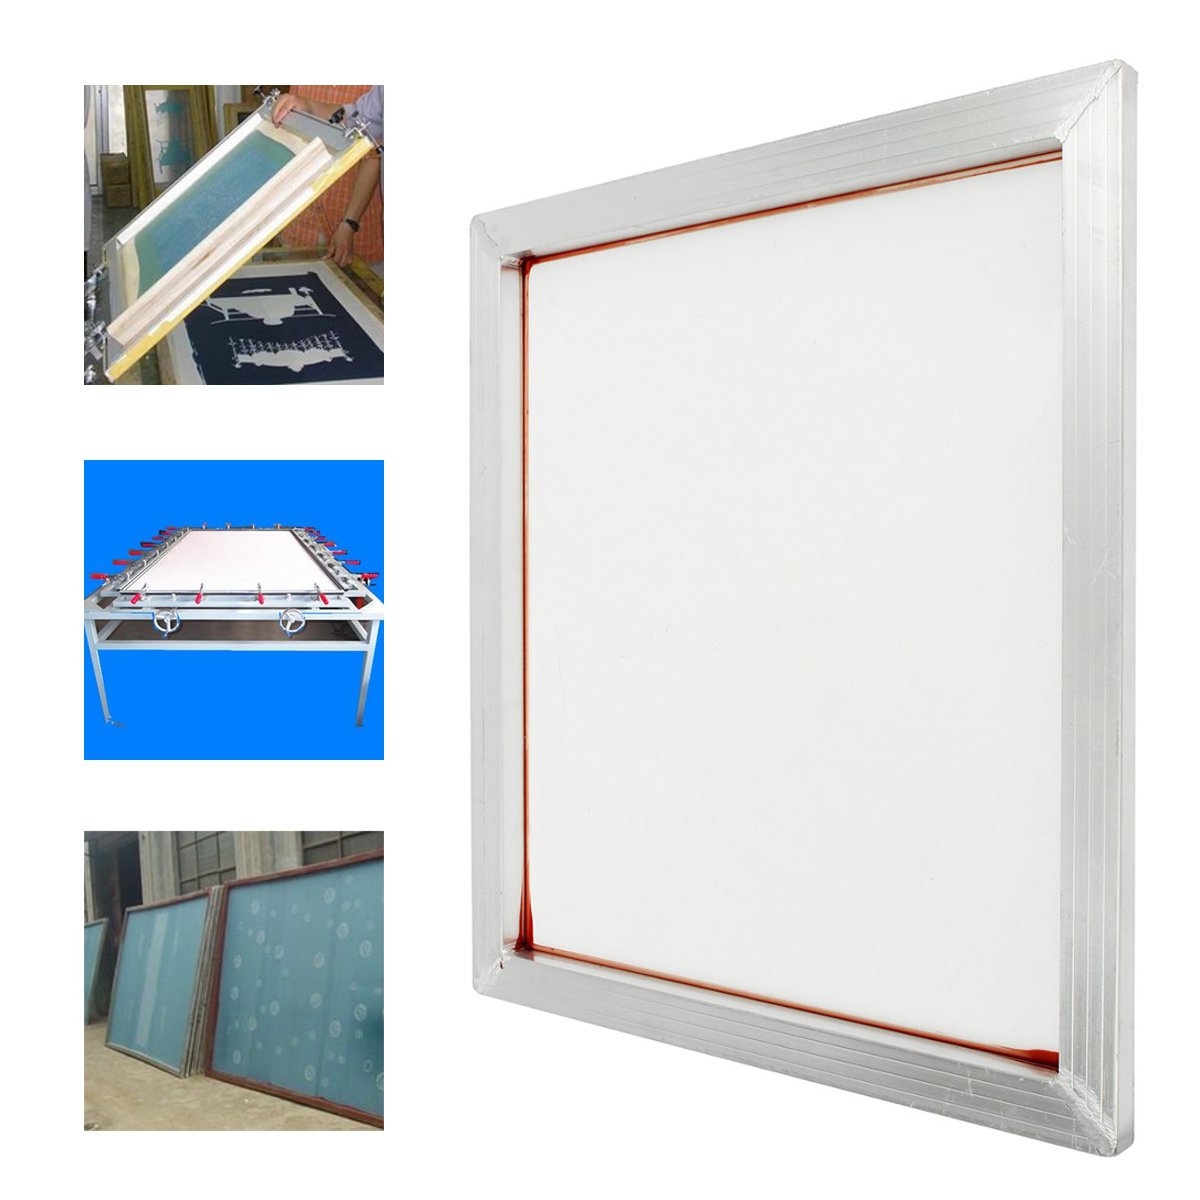 24x20-Aluminum-Silk-Screen-Printing-Press-Screens-Frame-With-230-Mesh-Count-1382447-2